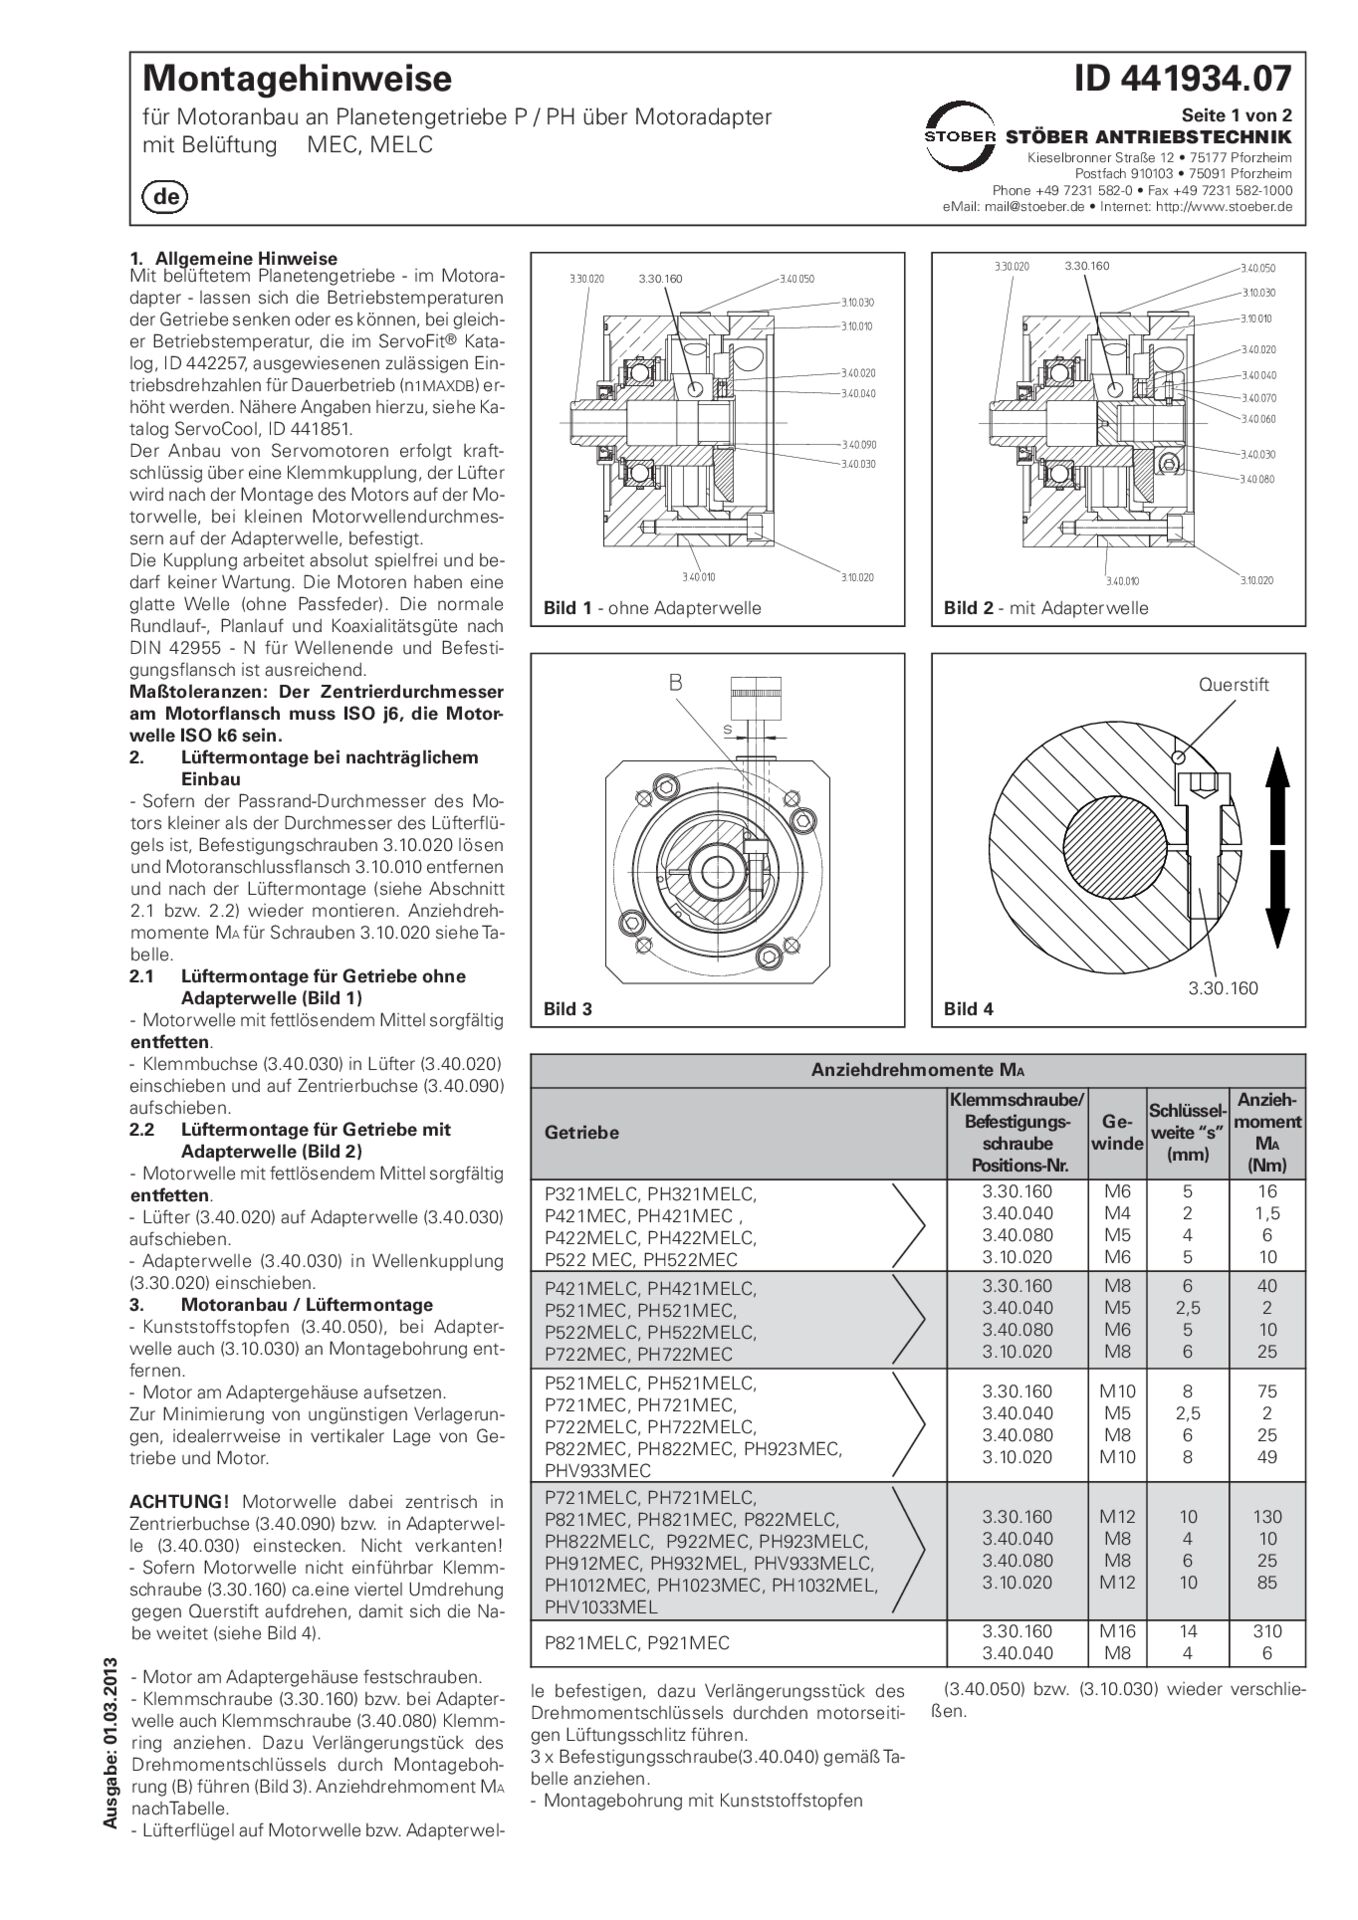 Mounting instructions Motor attachment on P _ PH by MEC MELCMontageanleitung Motoranbau an P _ PH über MEC MELC